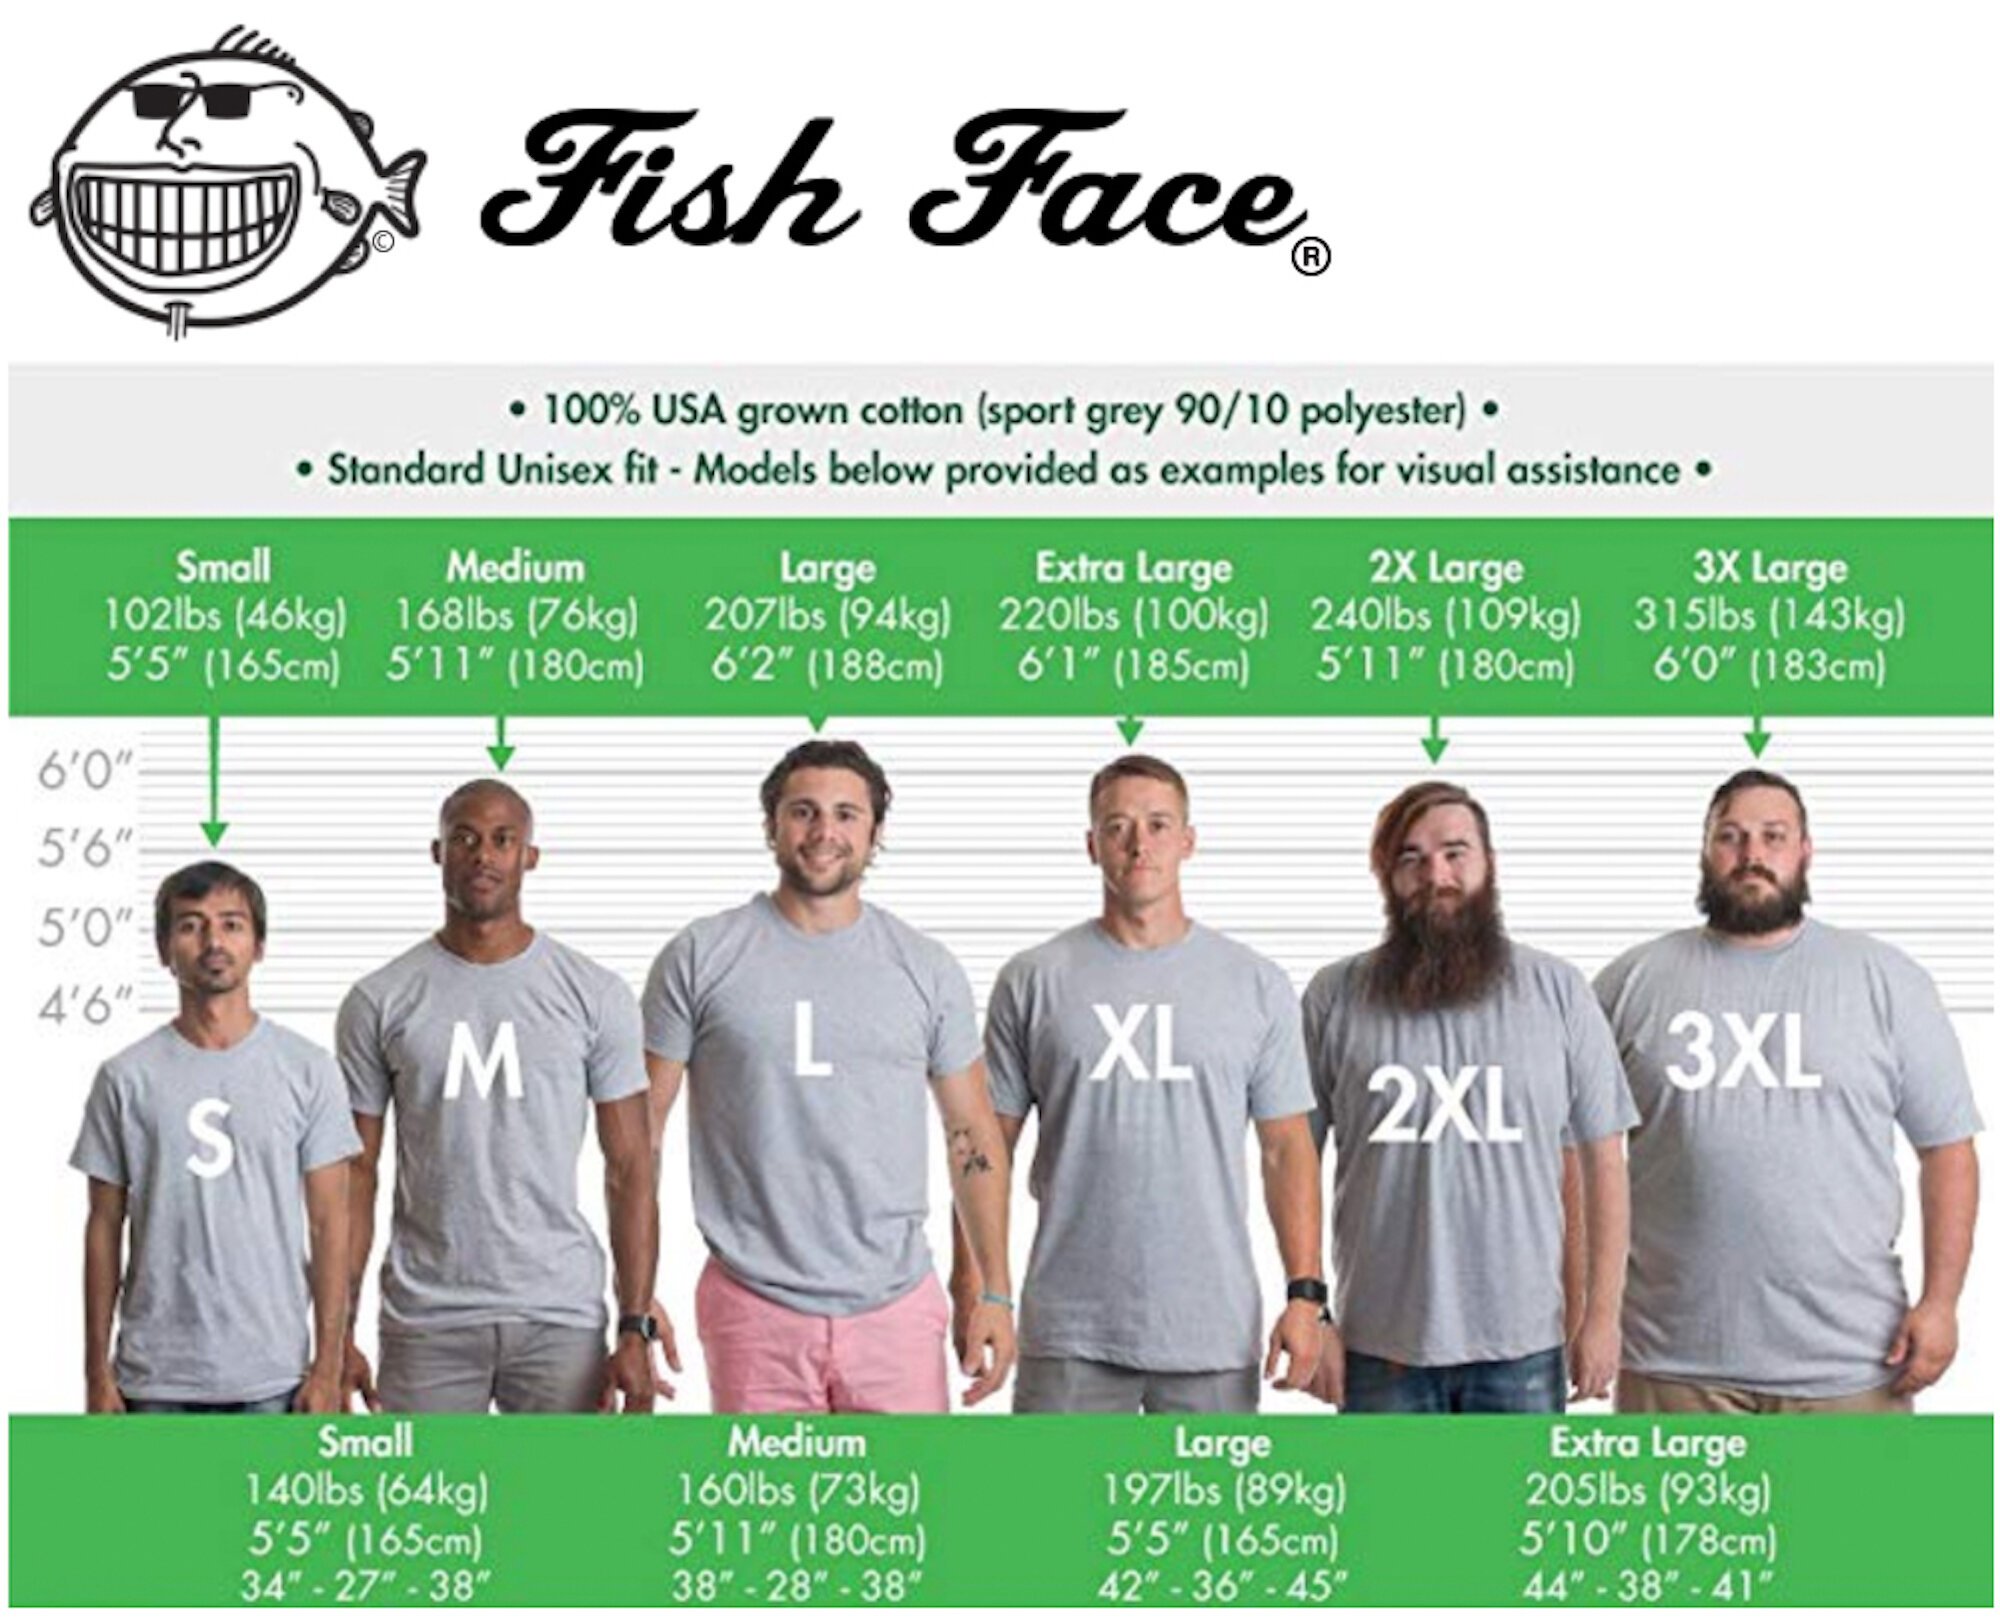 Perfect State for Fishing fl | Florida Fishing Shirt | Fish Face |Large